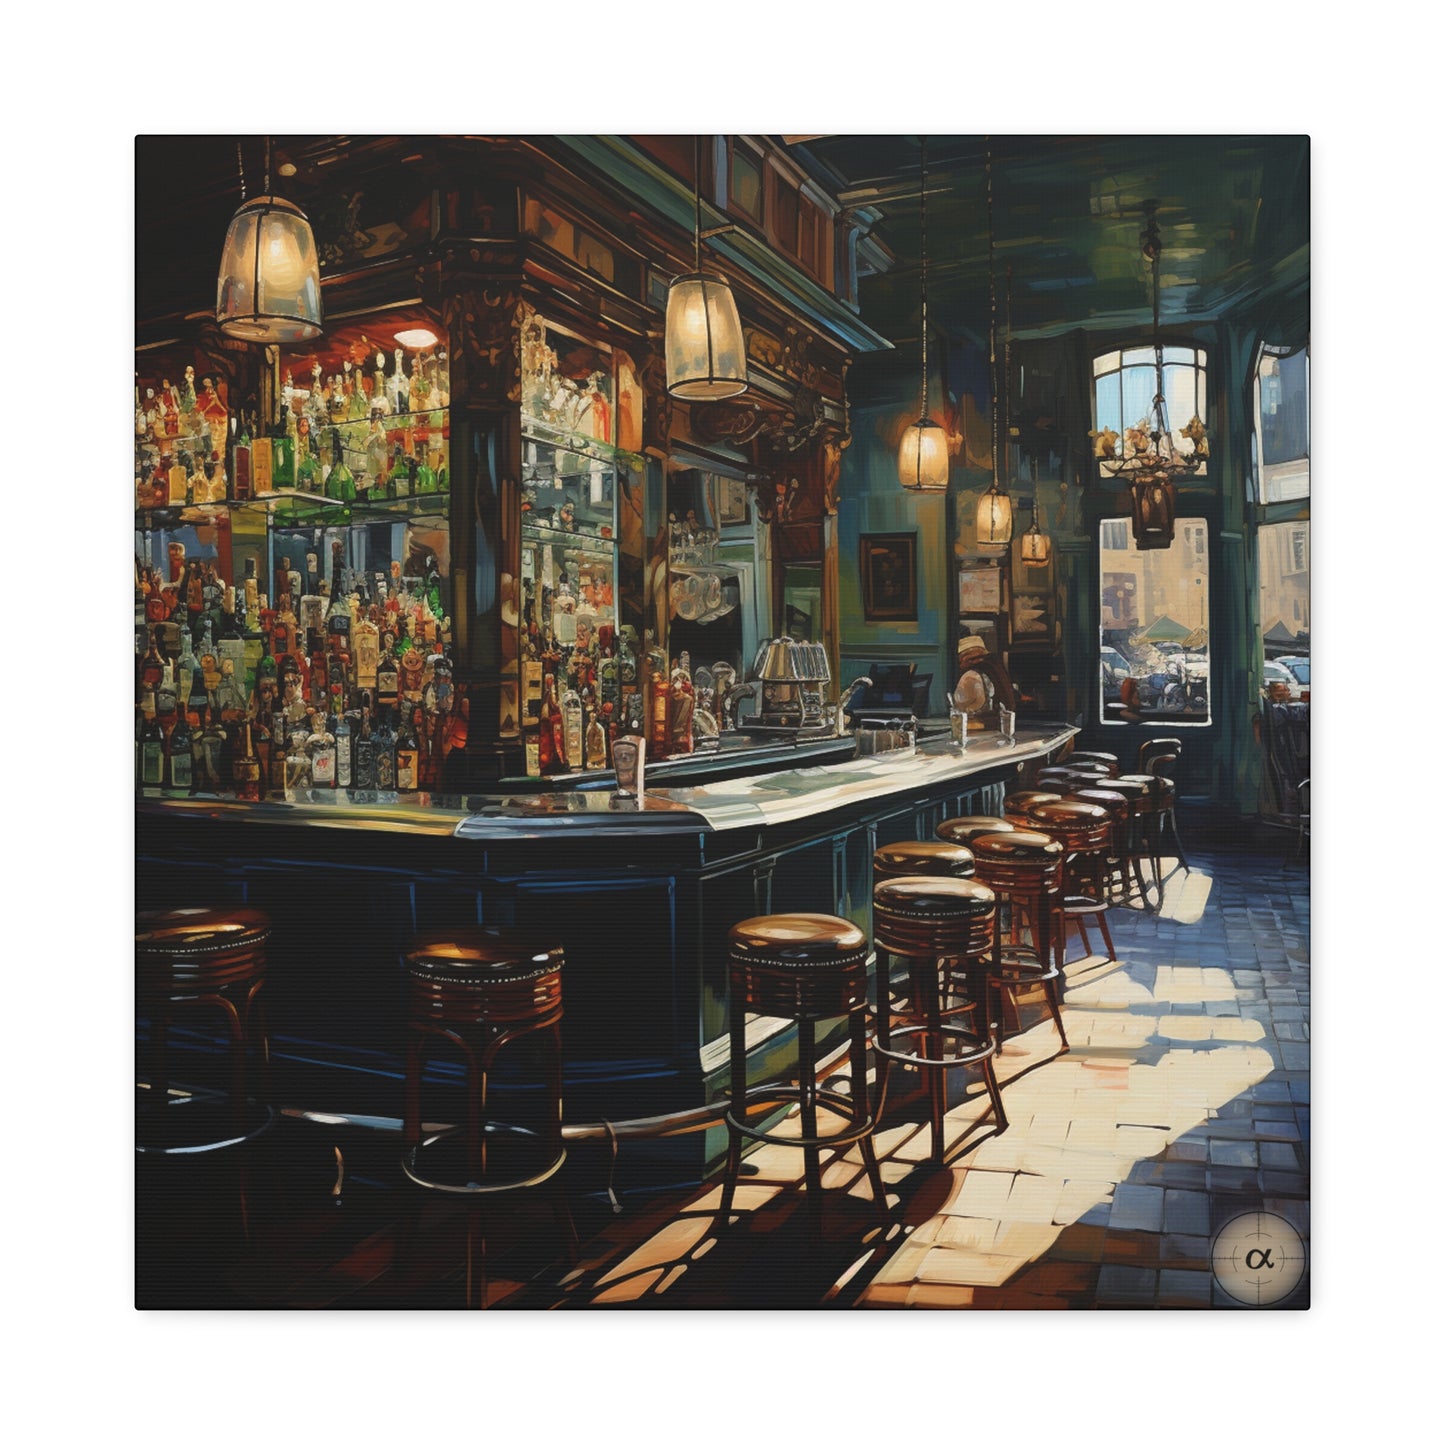 Art by Kendyll: "French Quarter Bar" on Canvas